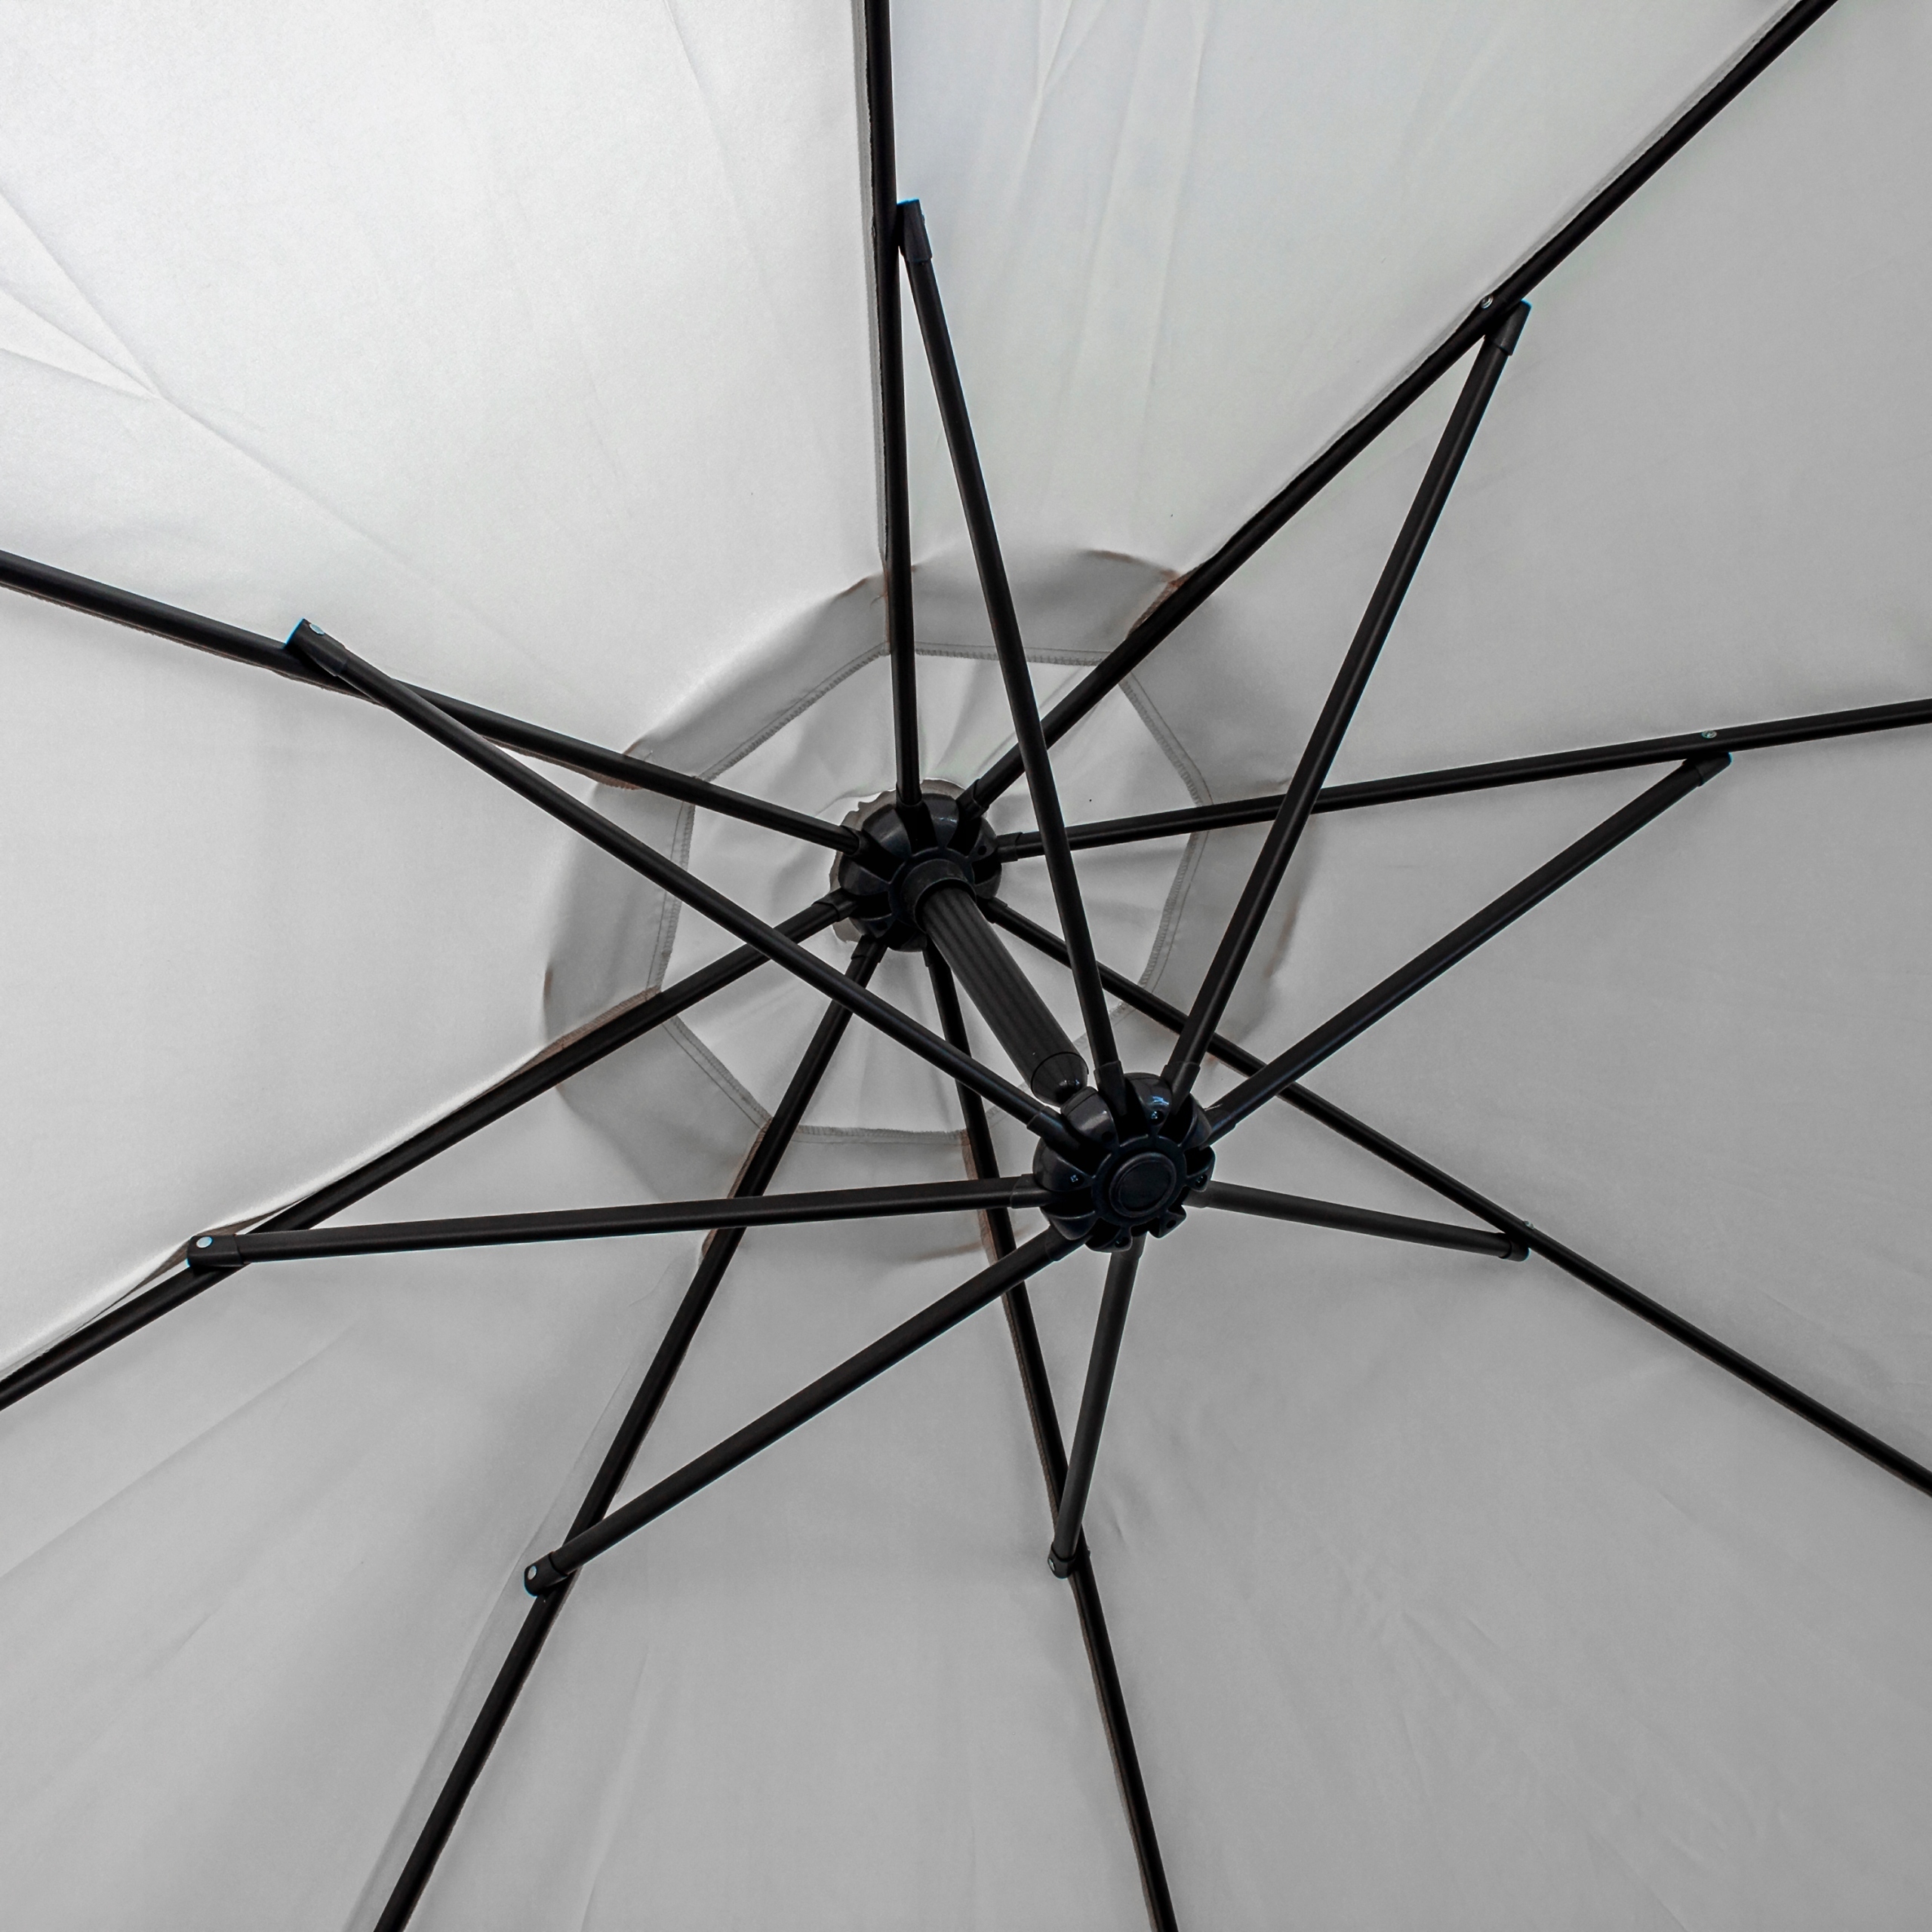 Duży parasol ogrodowy Sapphire ST-2020 Capri 350 cm